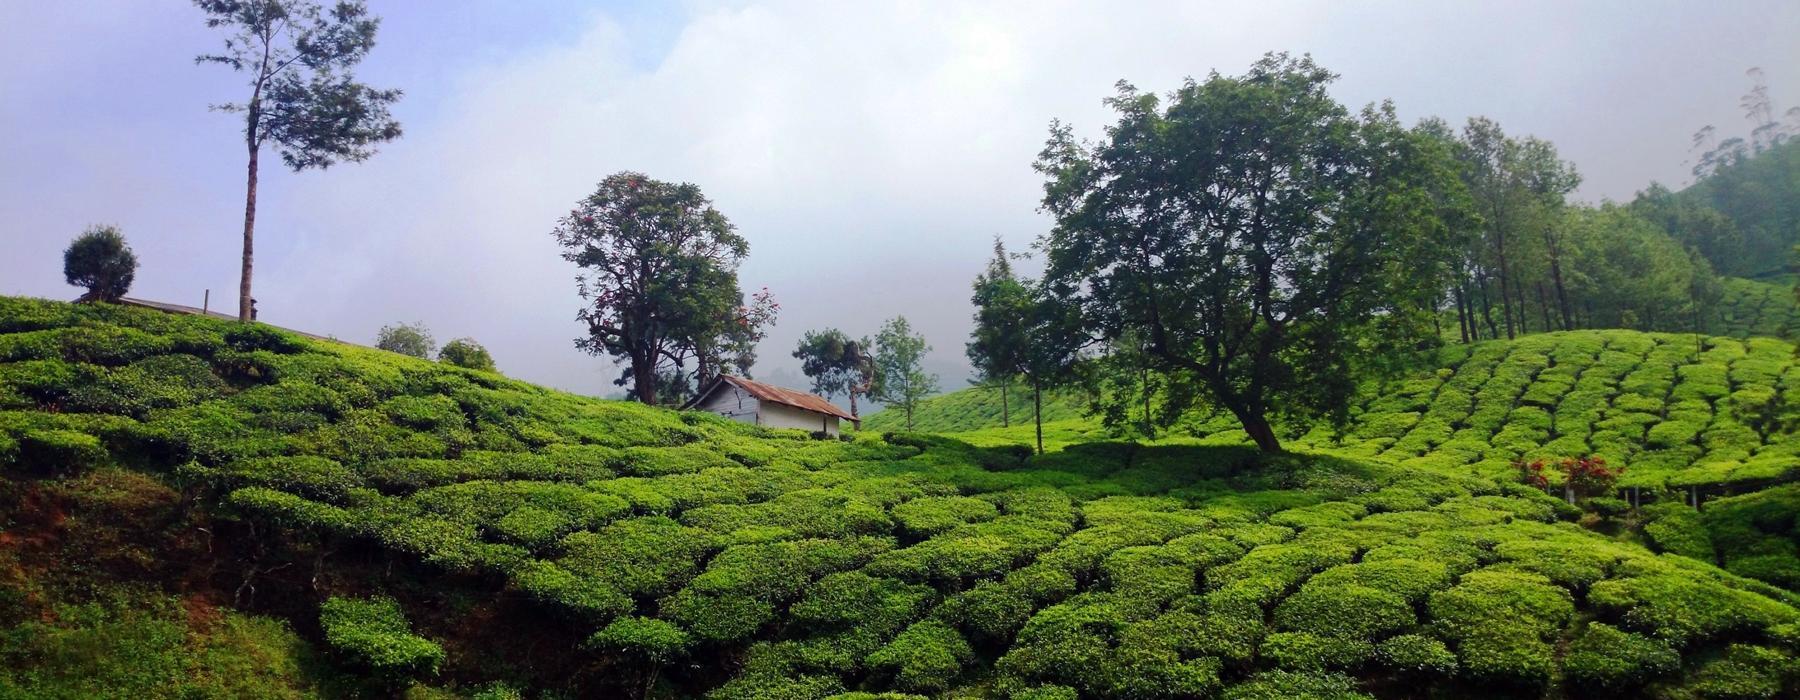 Tea/Spice Plantation Visit in Kerala